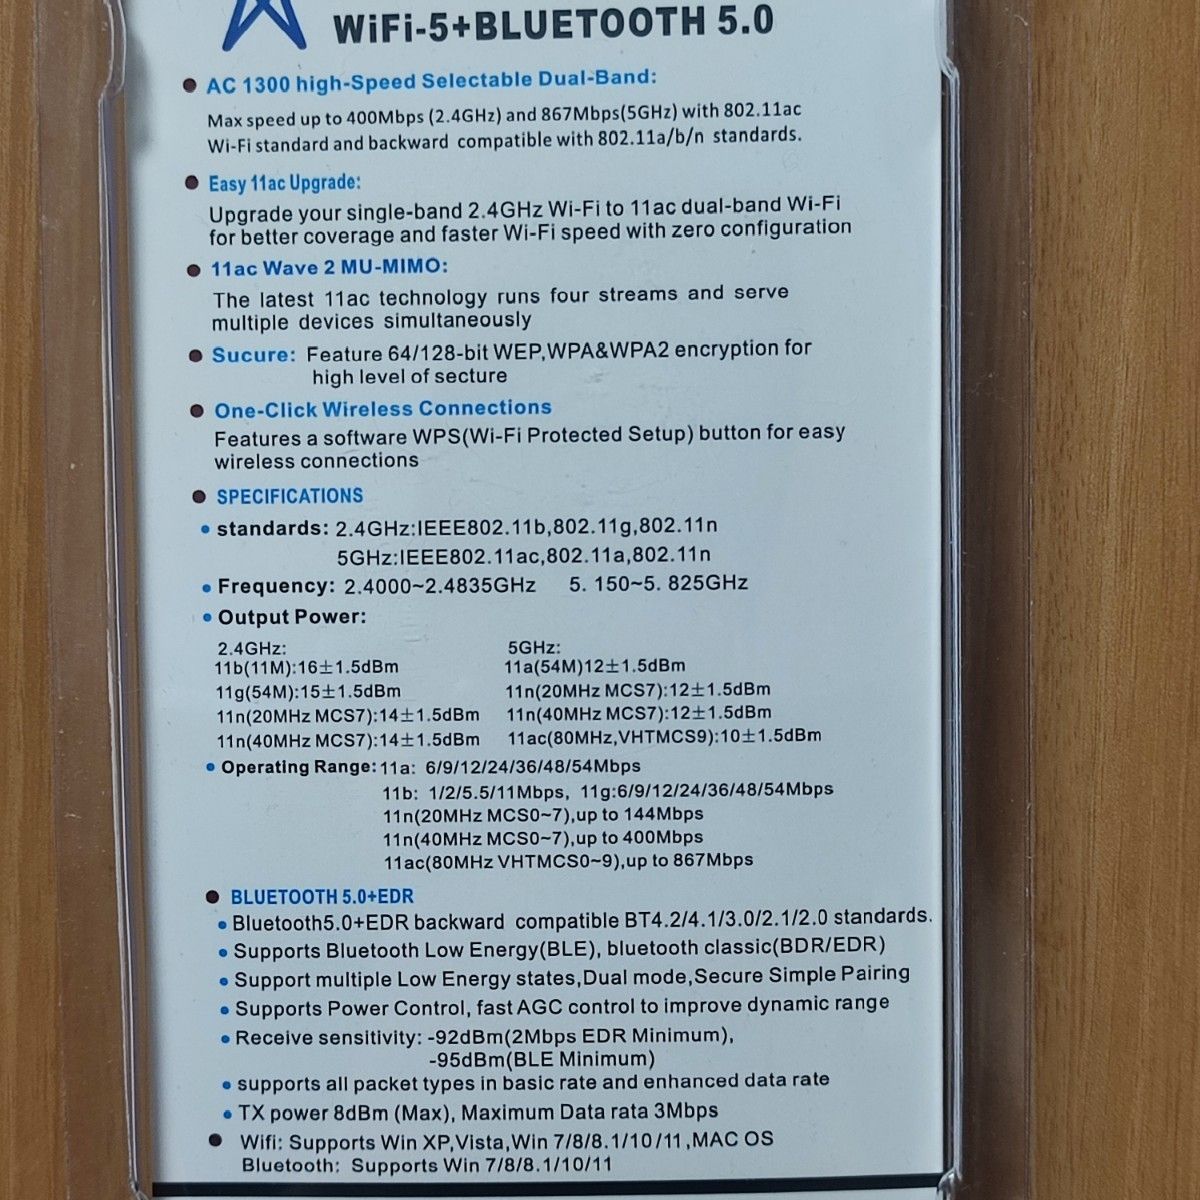 2in1 WiFi 無線LAN 子機 1300Mbps Bluetooth5.0